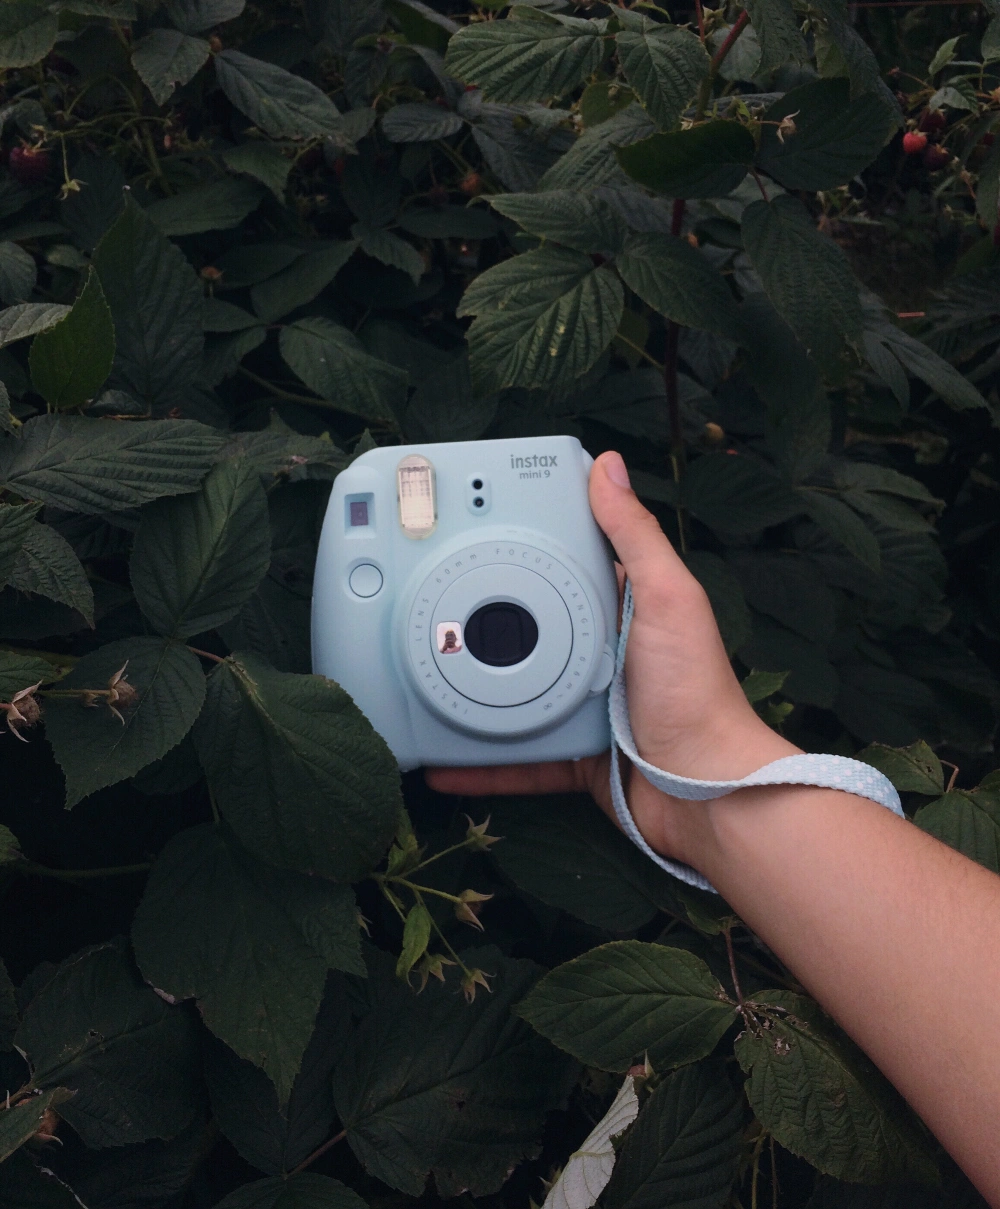 Polaroid camera 
#freetoedit #dpcinmyhand